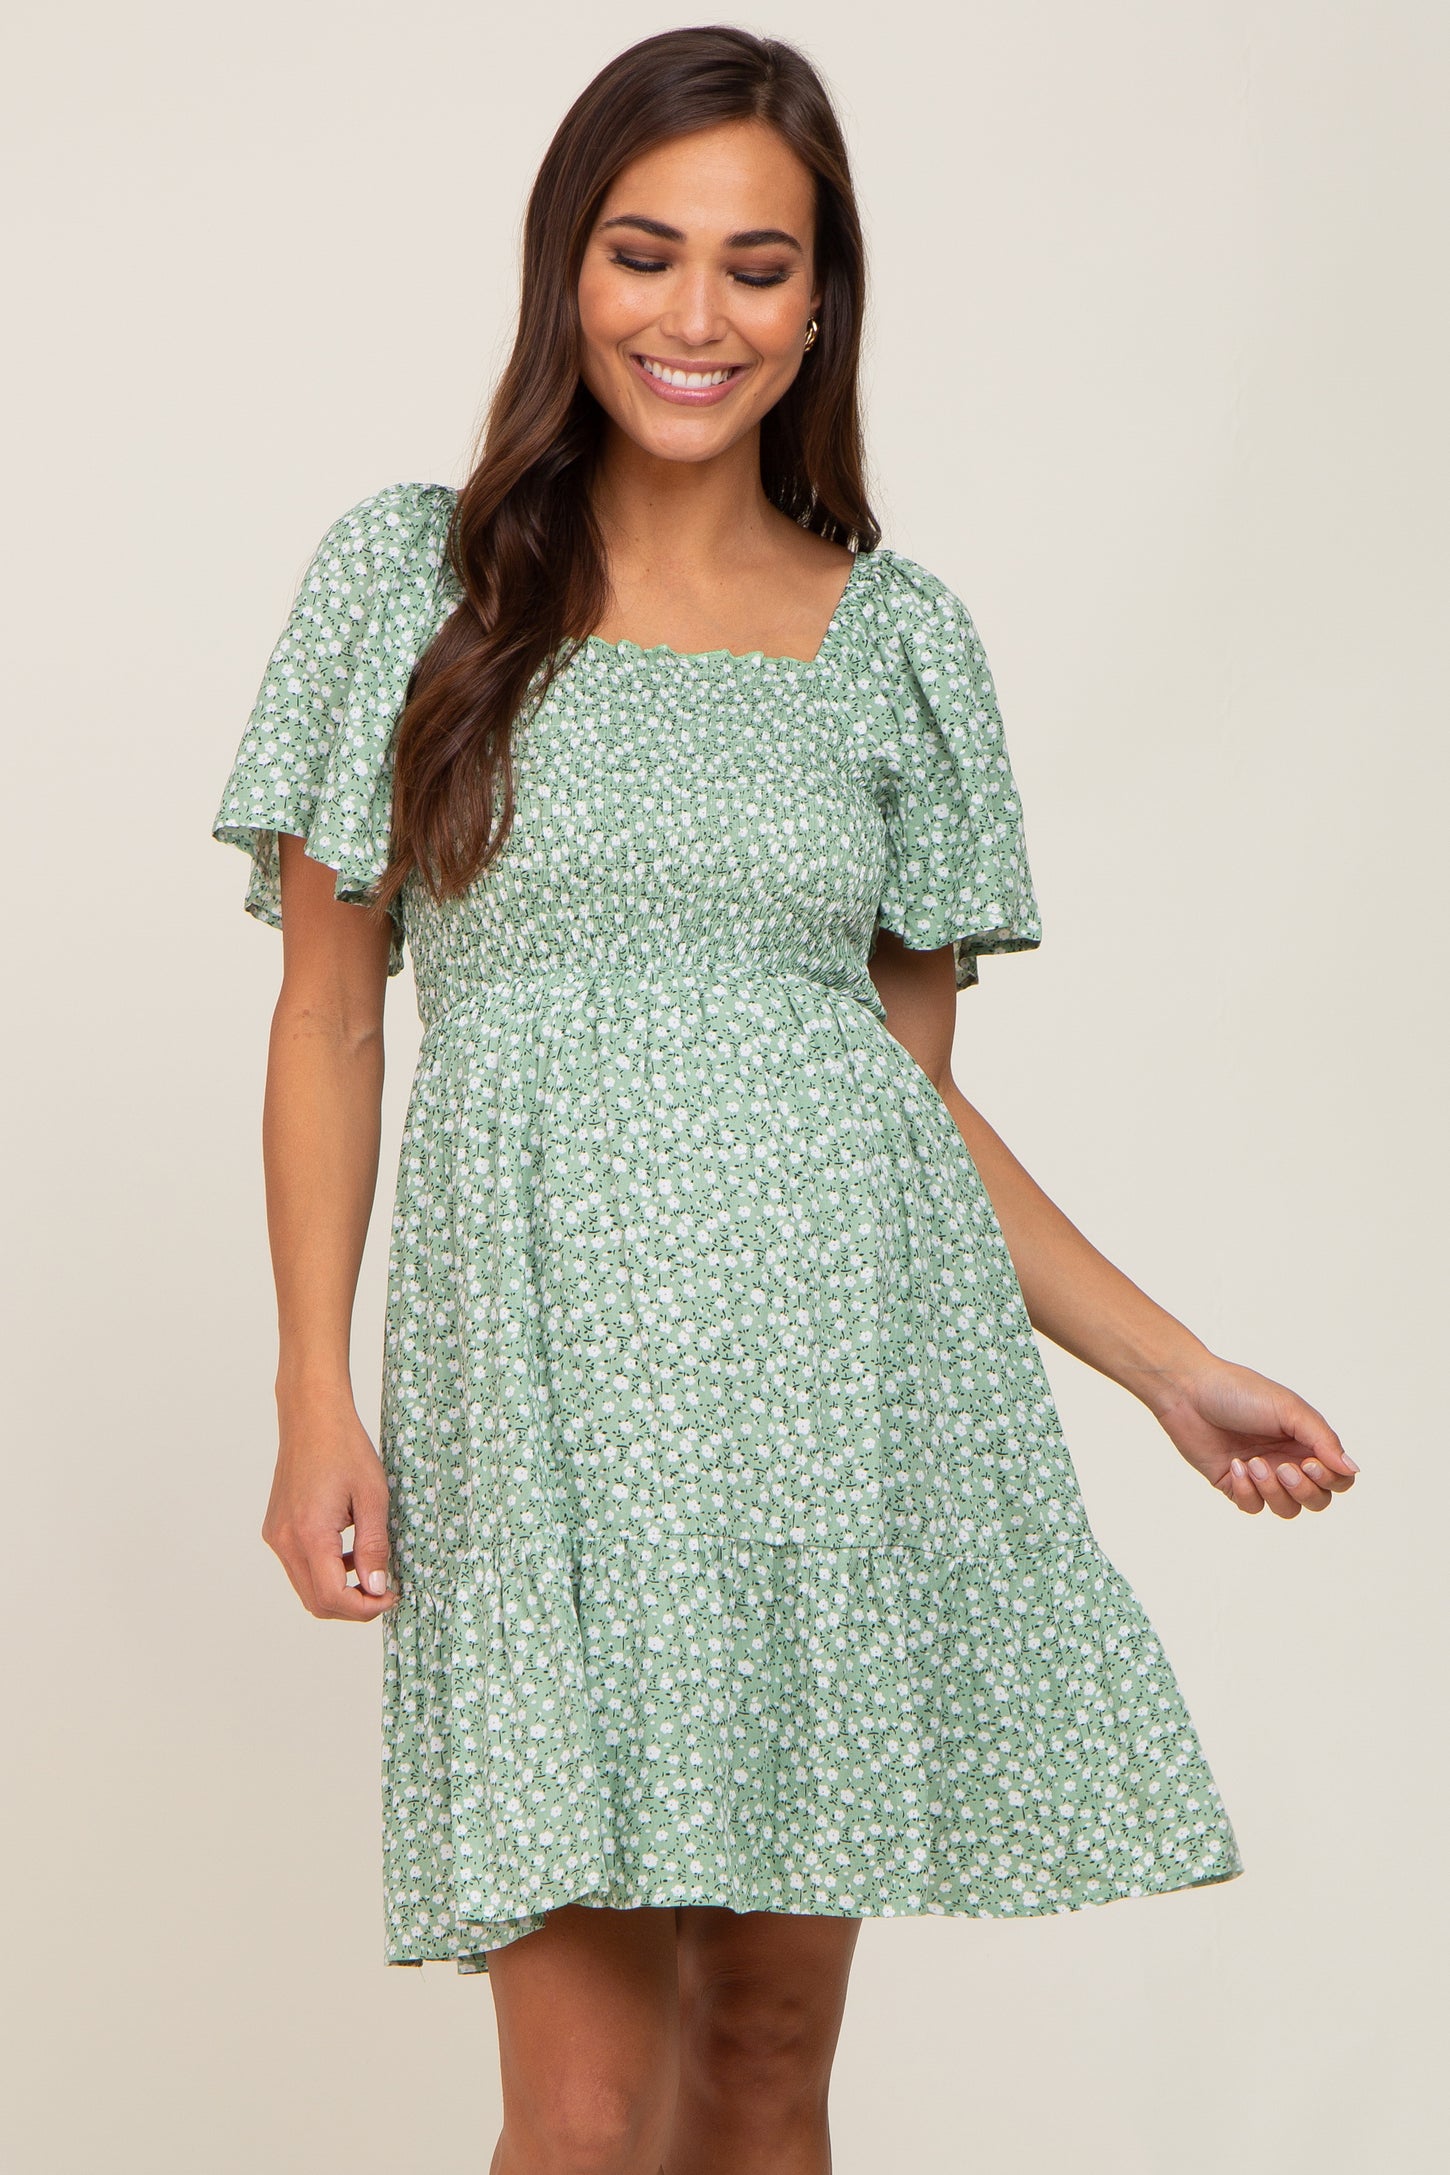 Olive Smocked Ruched Ruffle Hem Maternity Maxi Dress– PinkBlush